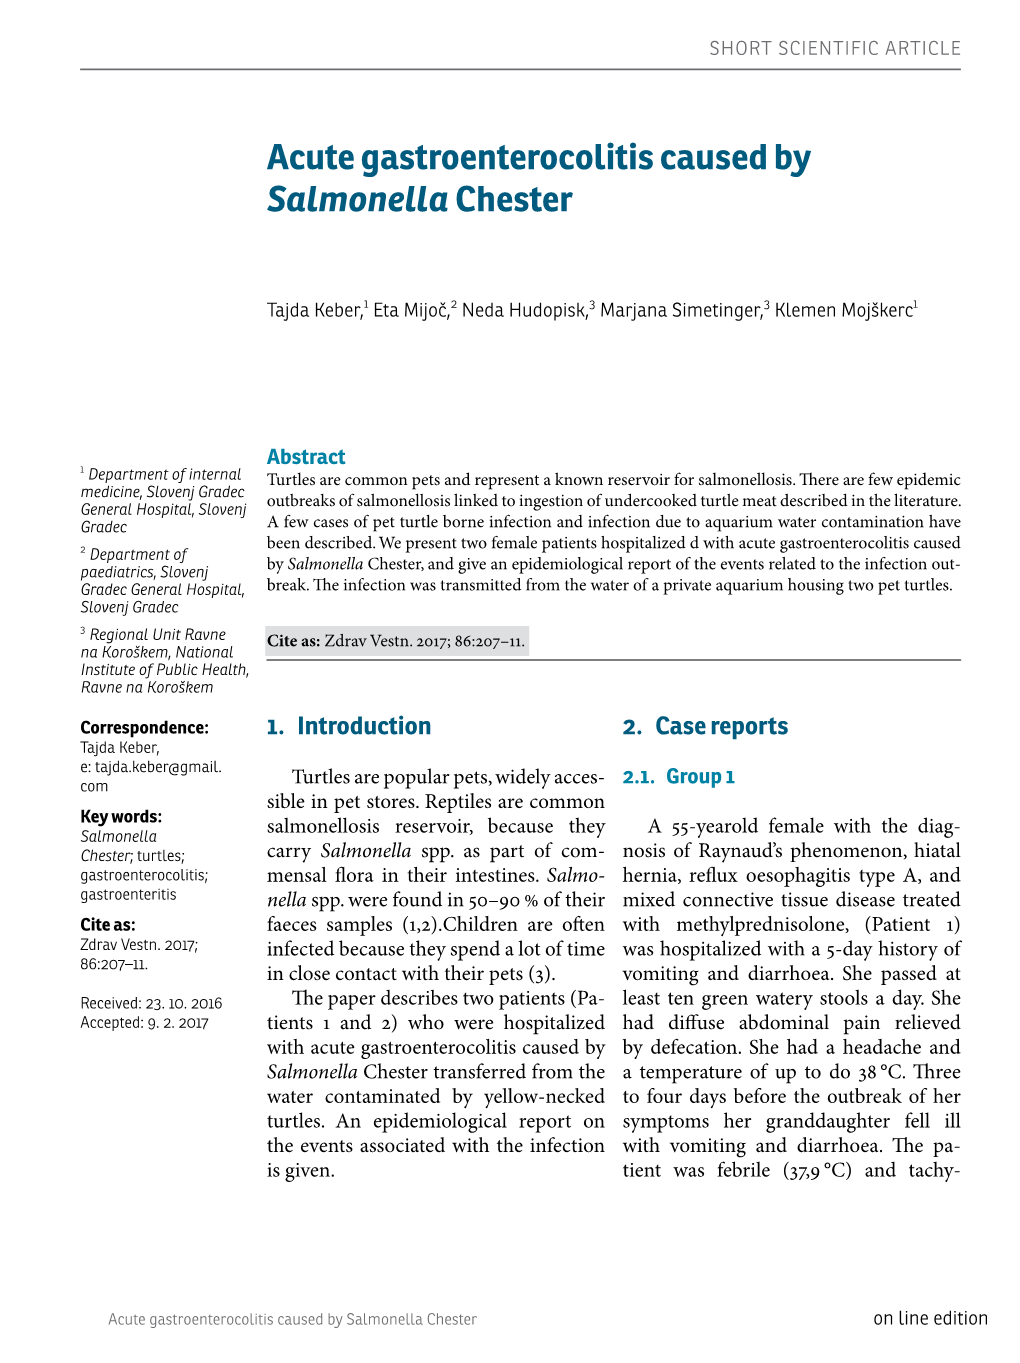 Acute Gastroenterocolitis Caused by Salmonellachester